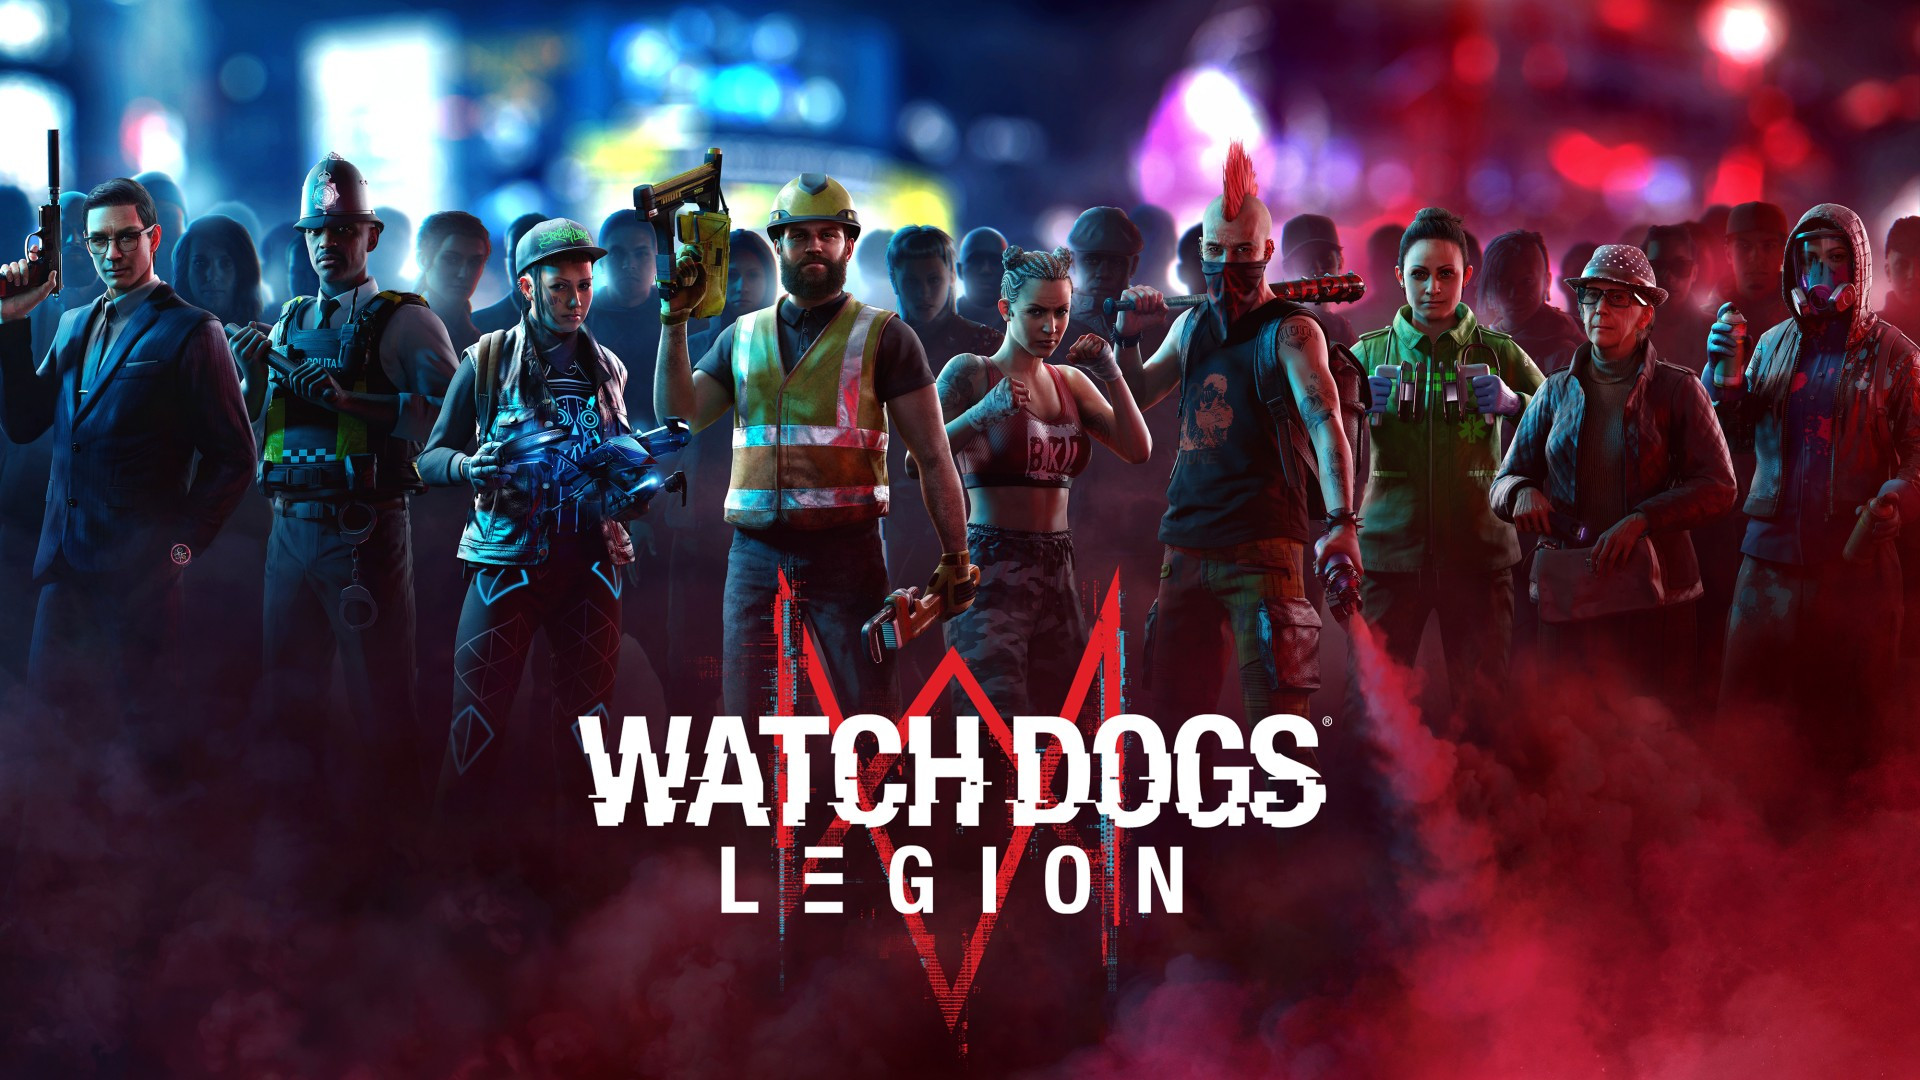 Vaata Dogs Legion 1